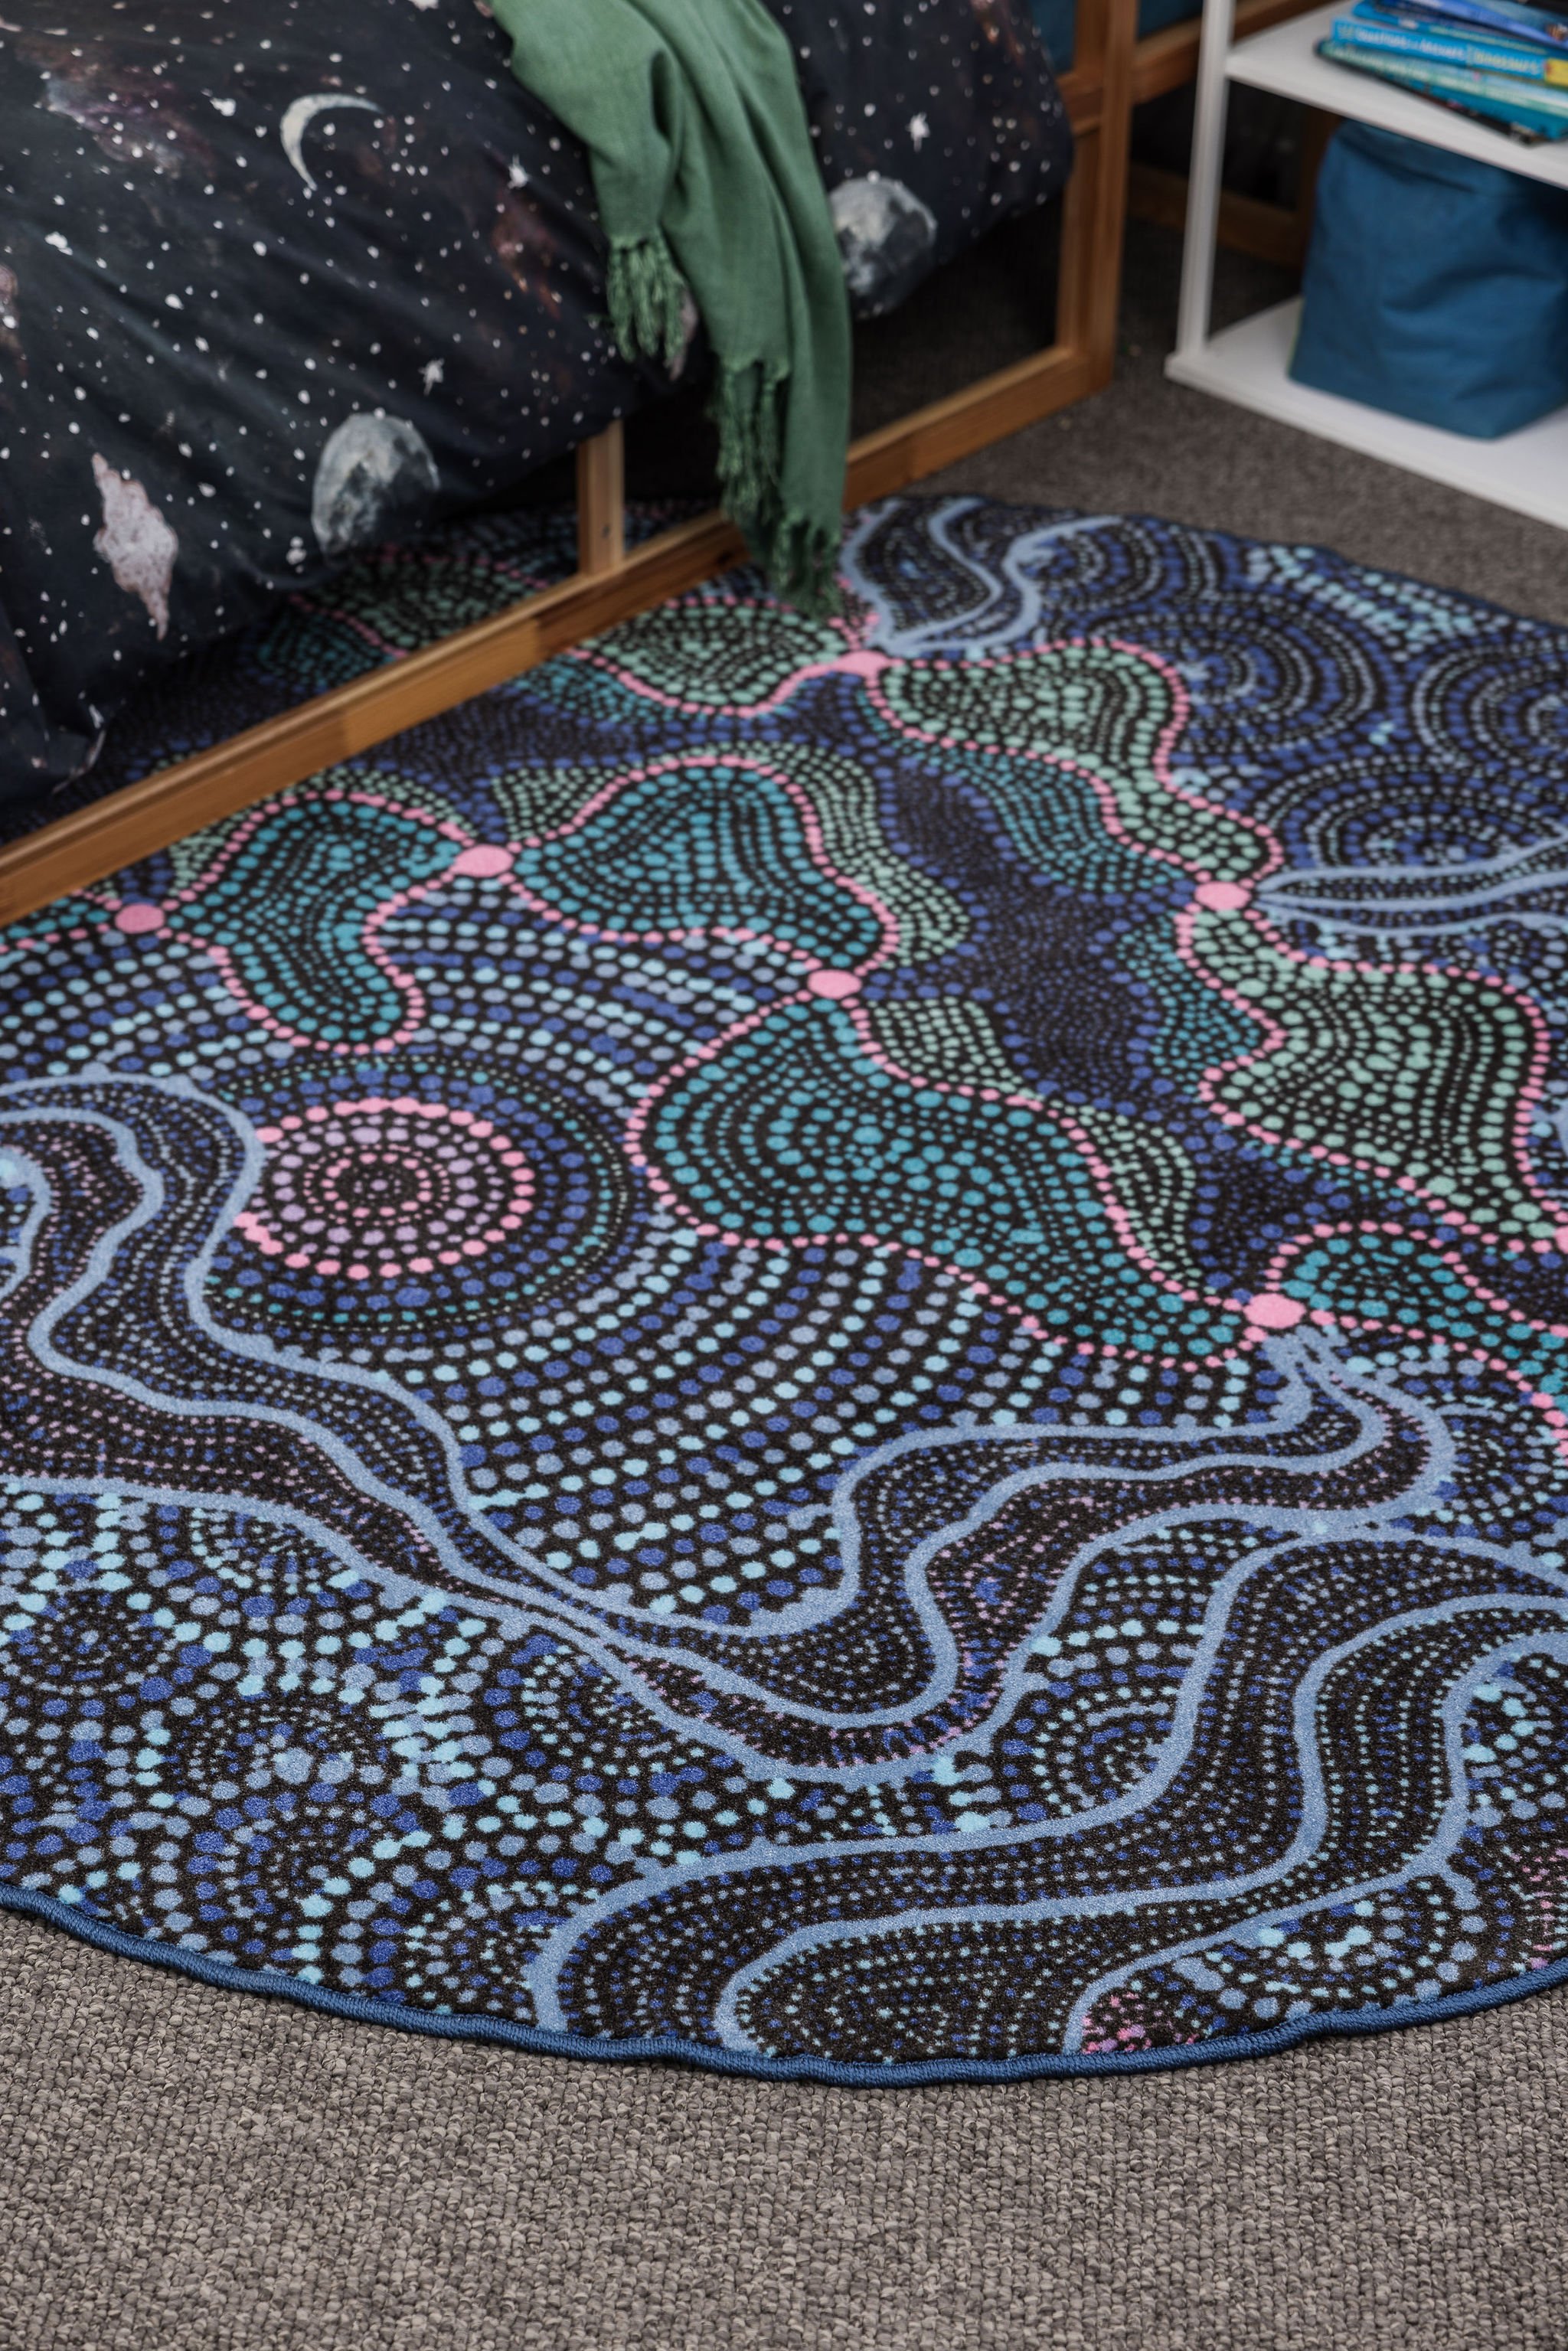 Tanika-Blair-Photography-Emro-Designs-Daycare-Aboriginal-Floor-Rugs-54.jpg